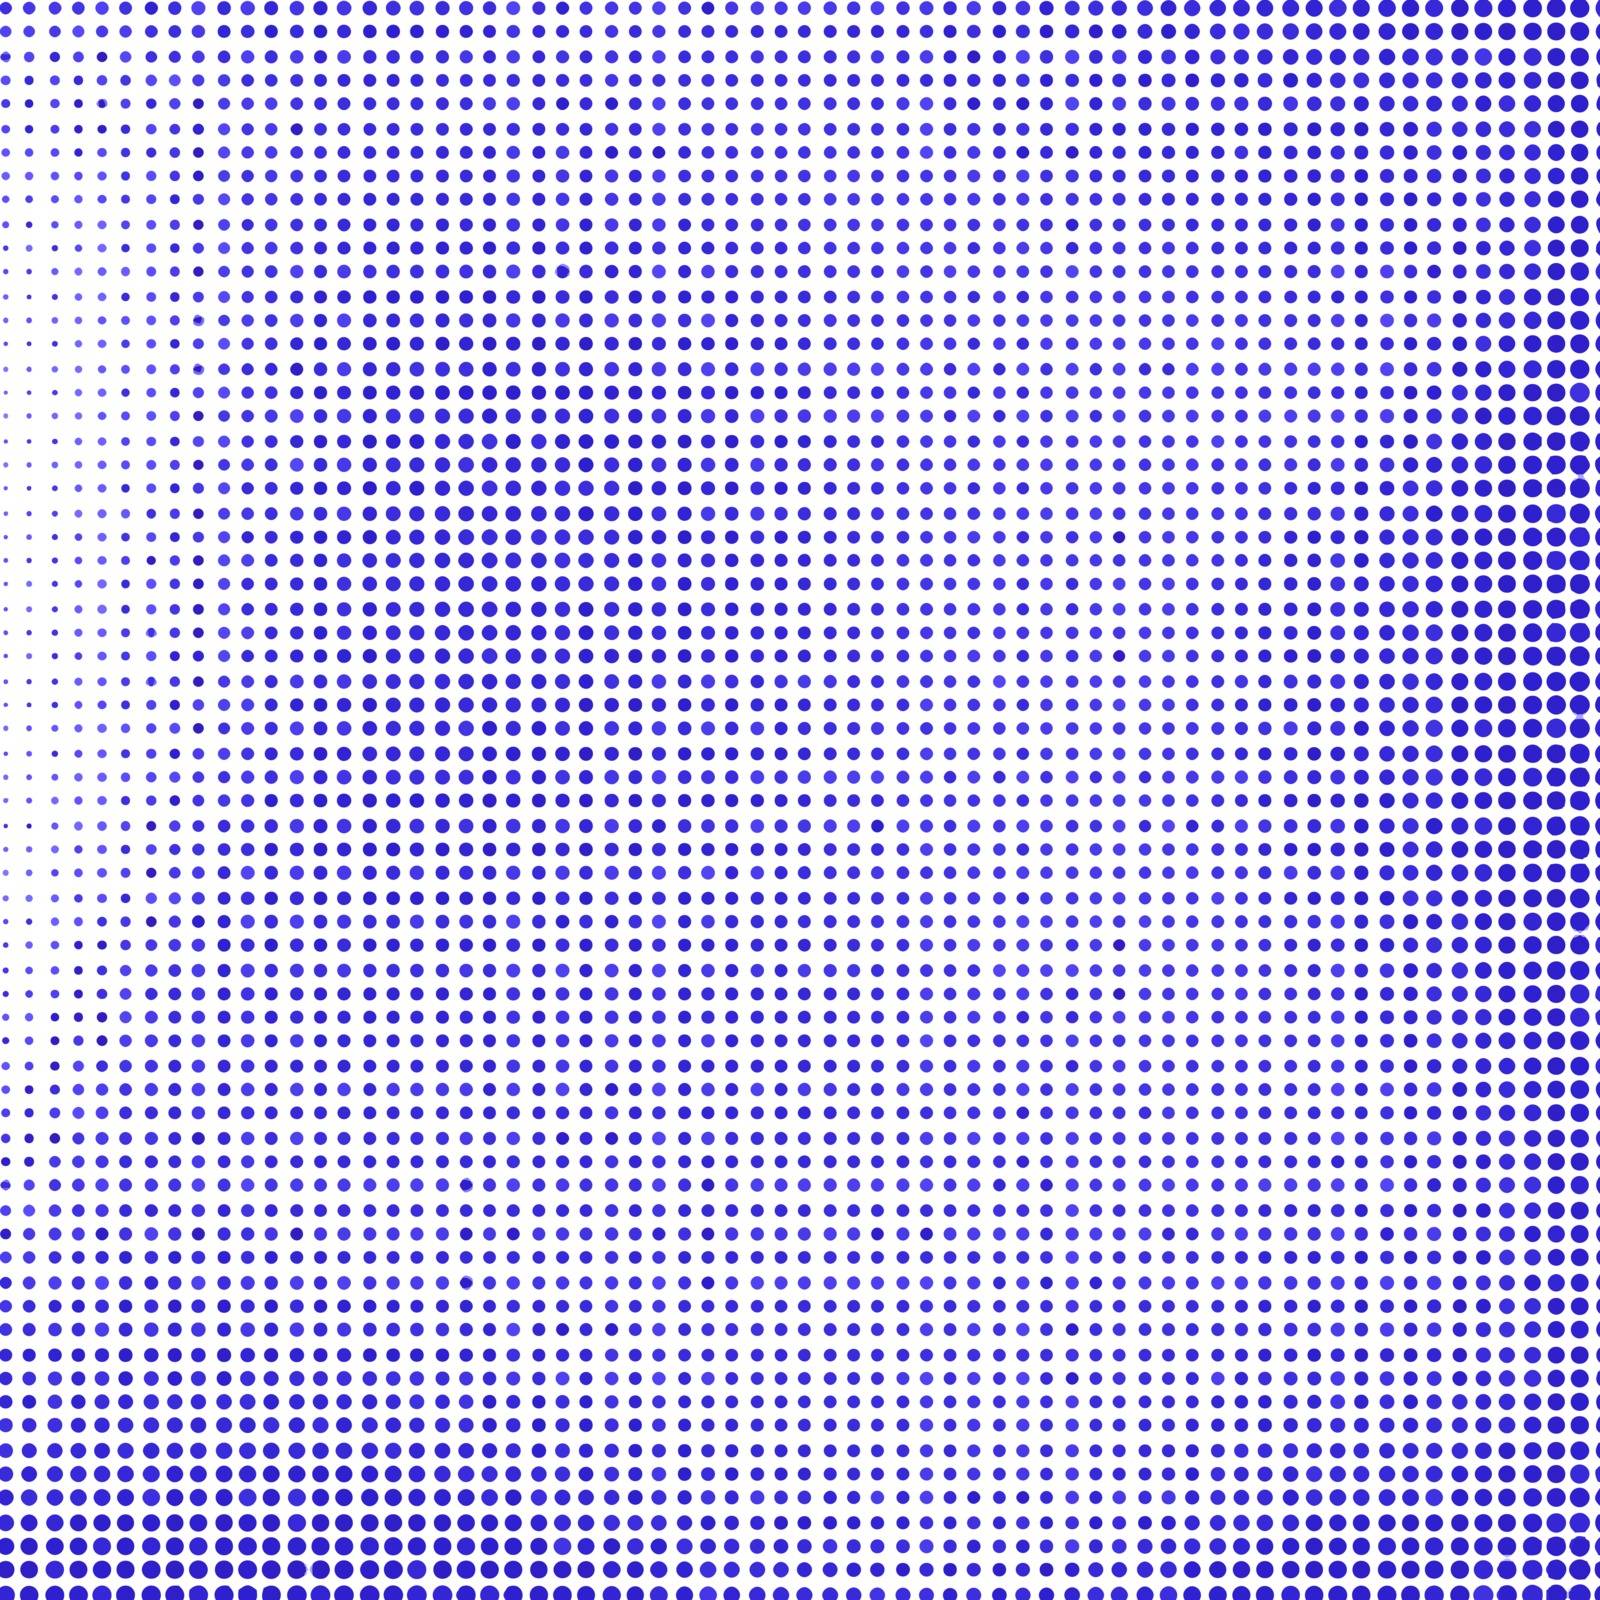 Blue Halftone Background. Blue Dotted Halftone Pattern